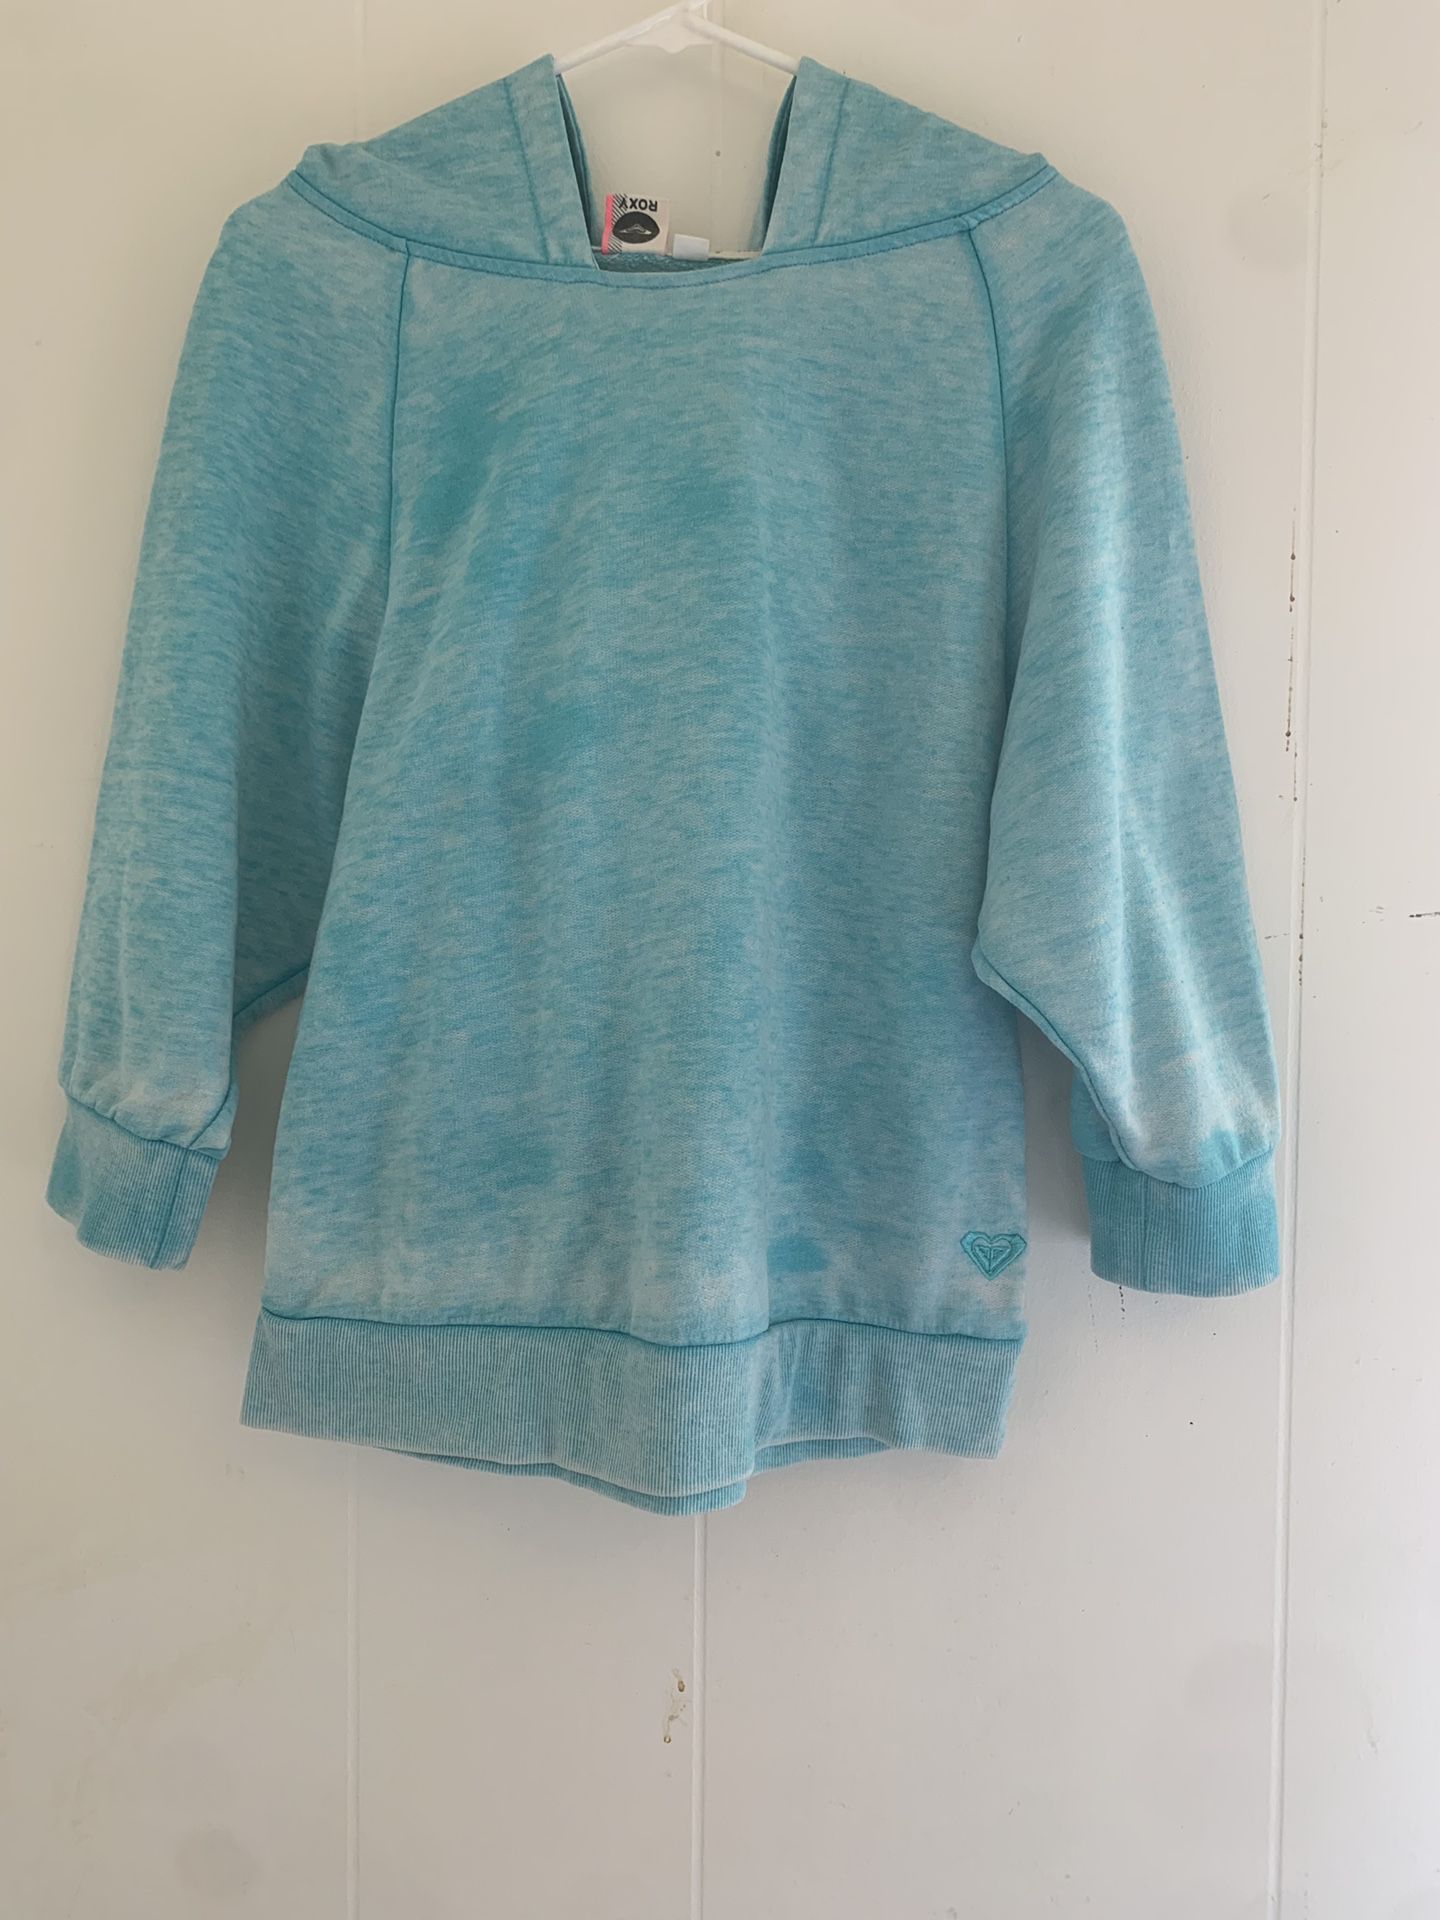 Roxy 3/4 sleeve Sweatshirt size medium